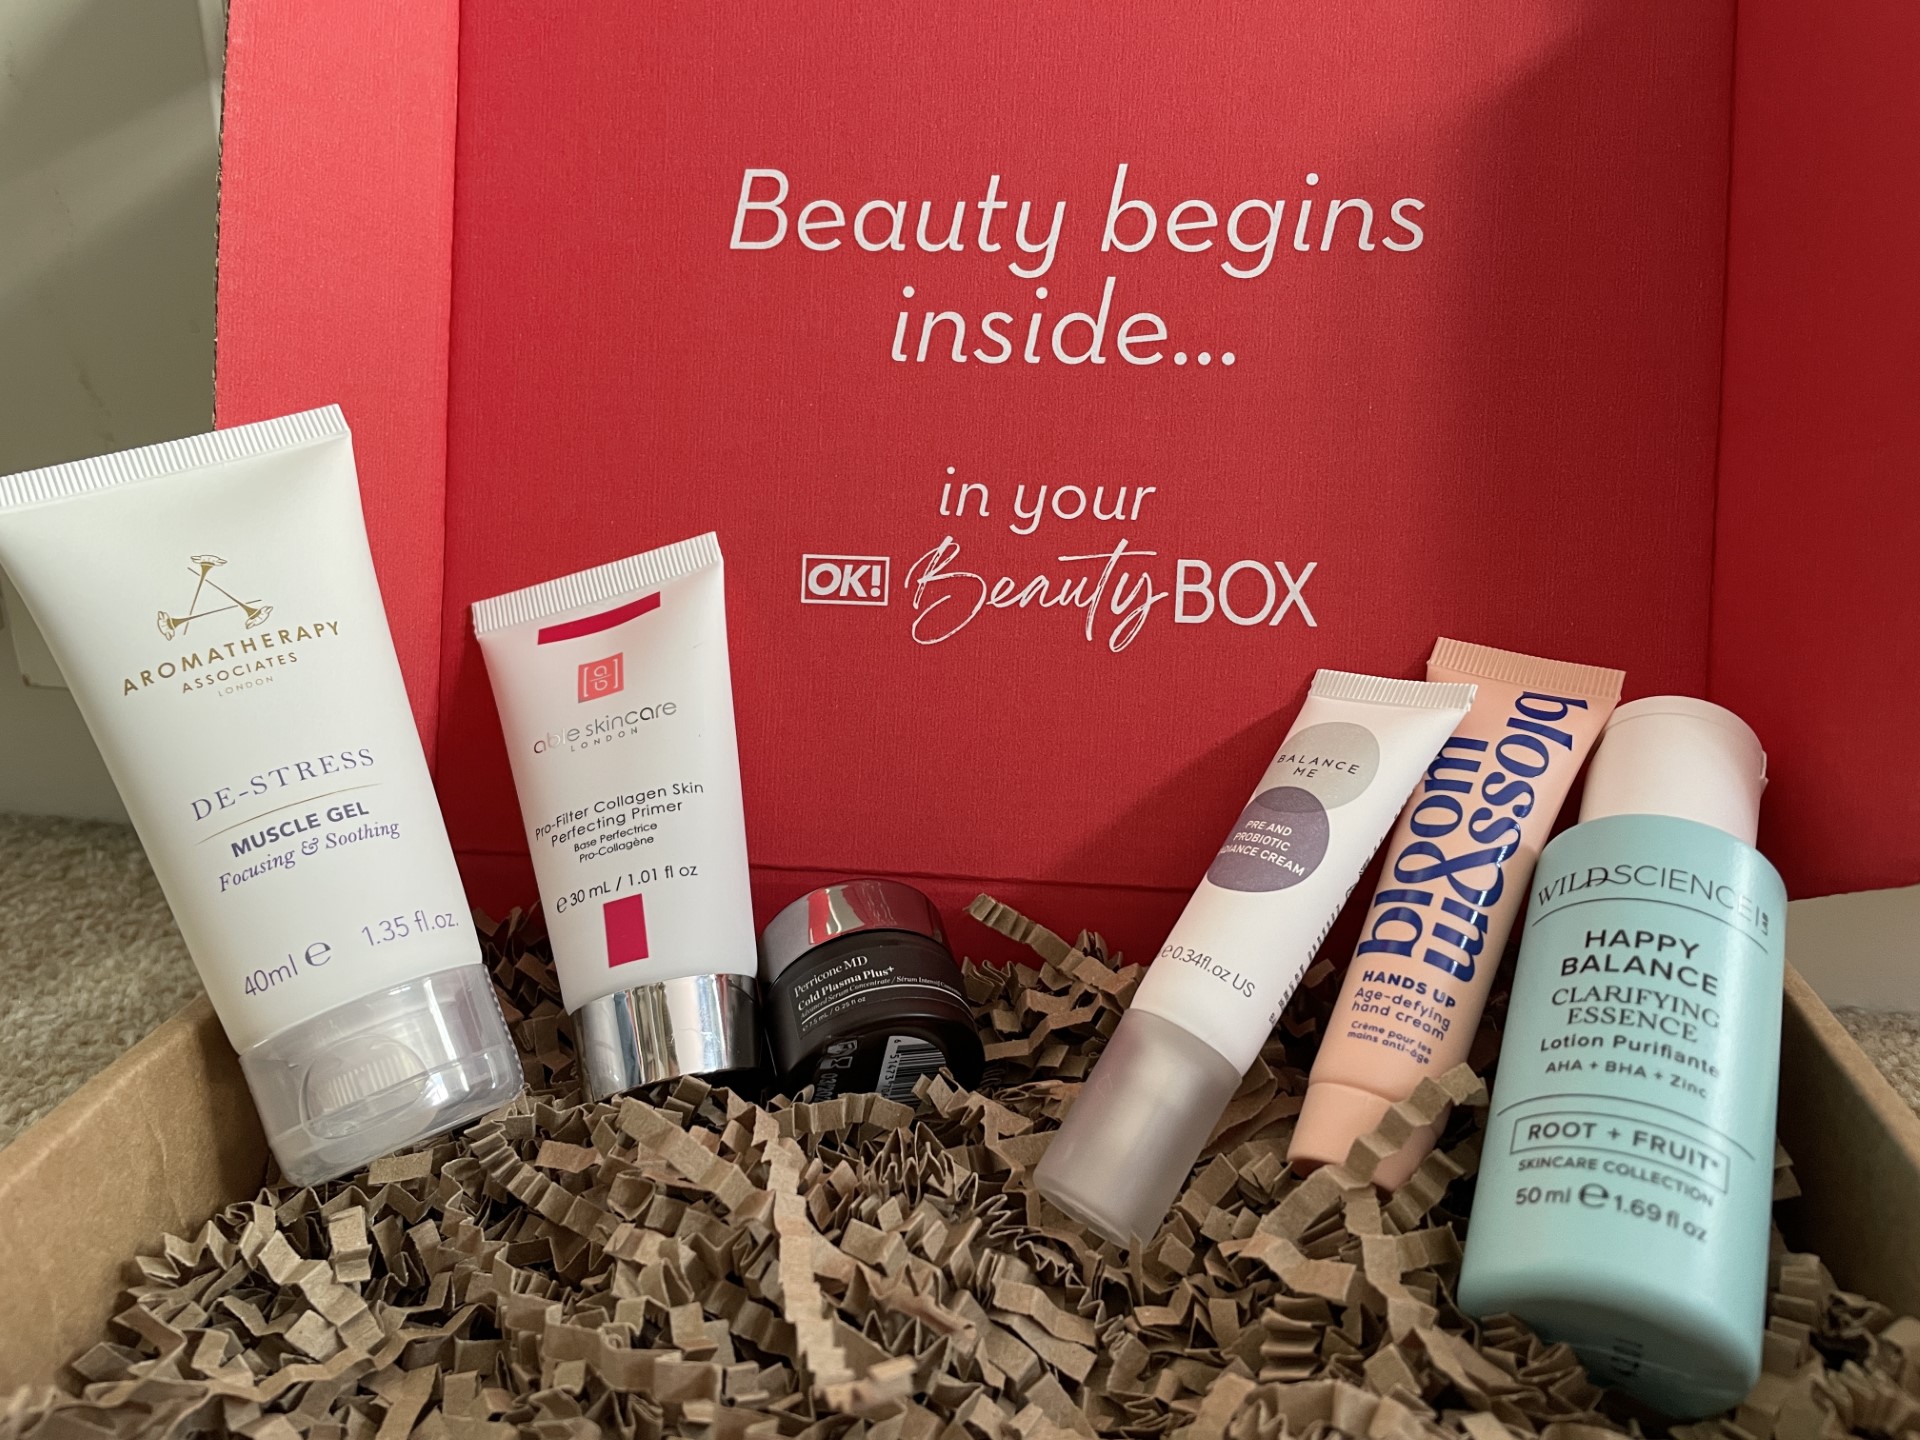 Ok! Beauty Box August box